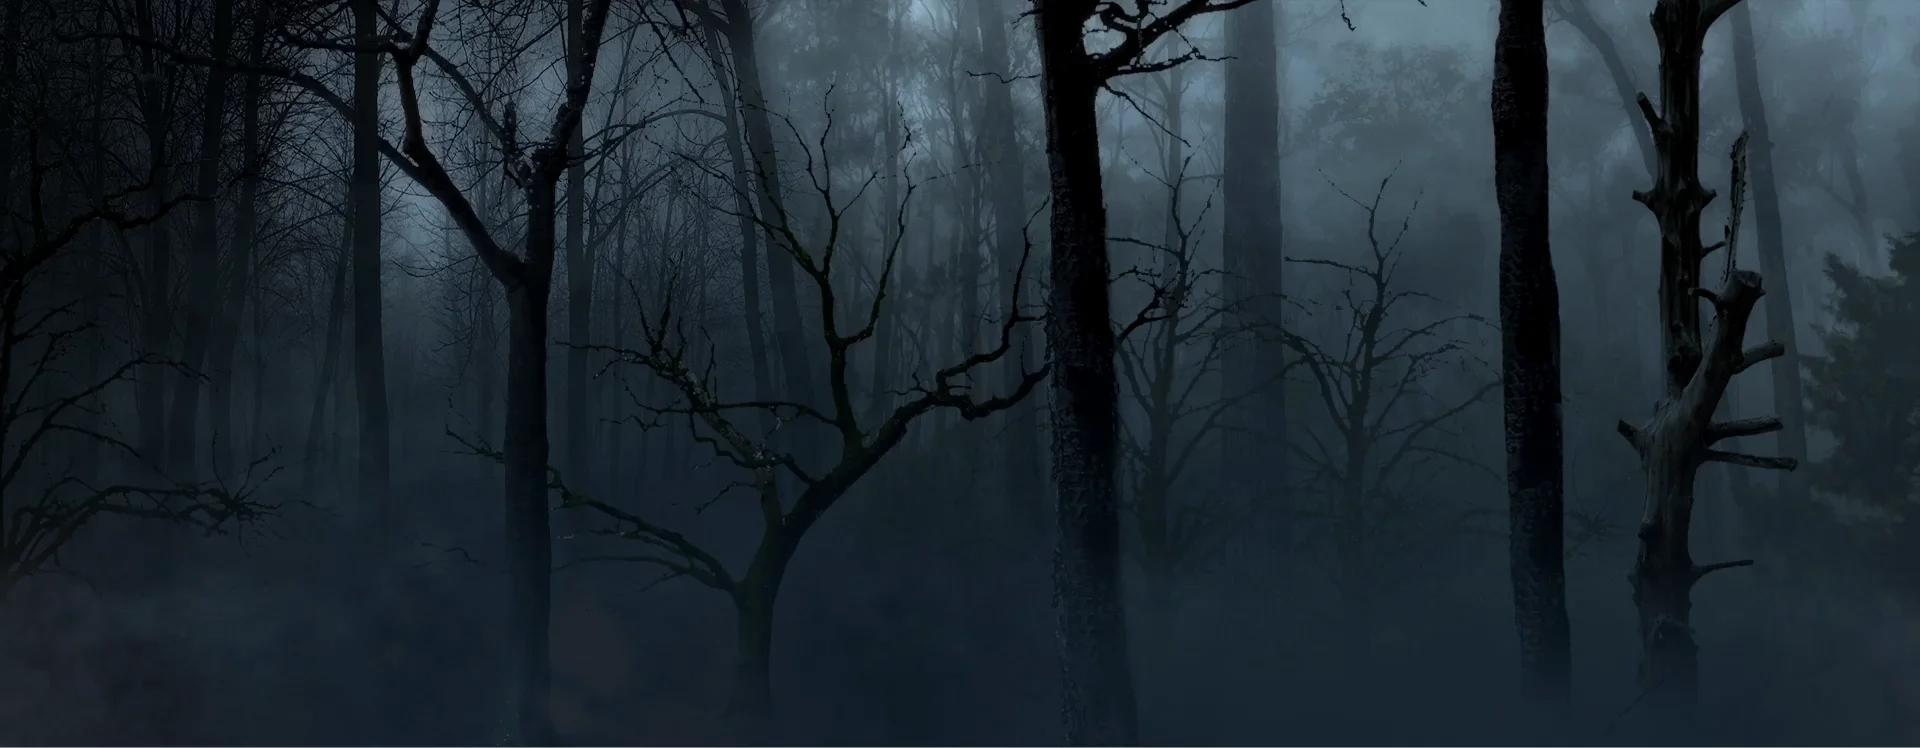 Темная ис. Тёмный лес Дрим кор. Dark Ambient Forest. Символы из клипа Ghost in the Fog. 2000 - Her Ghost in the Fog (Single).